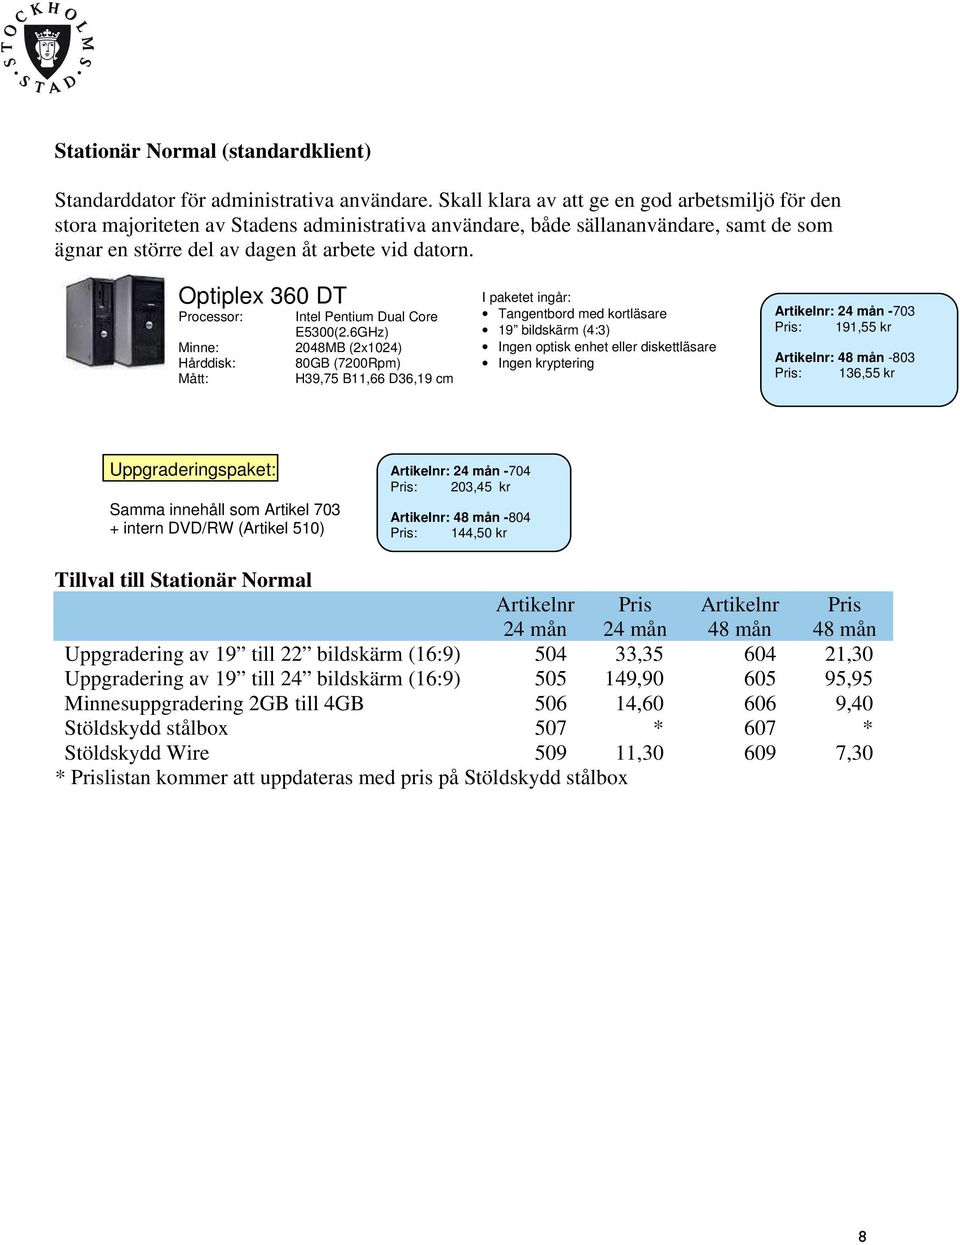 Optiplex 360 DT Processor: Minne: Hårddisk: Mått: Intel Pentium Dual Core E5300(2.